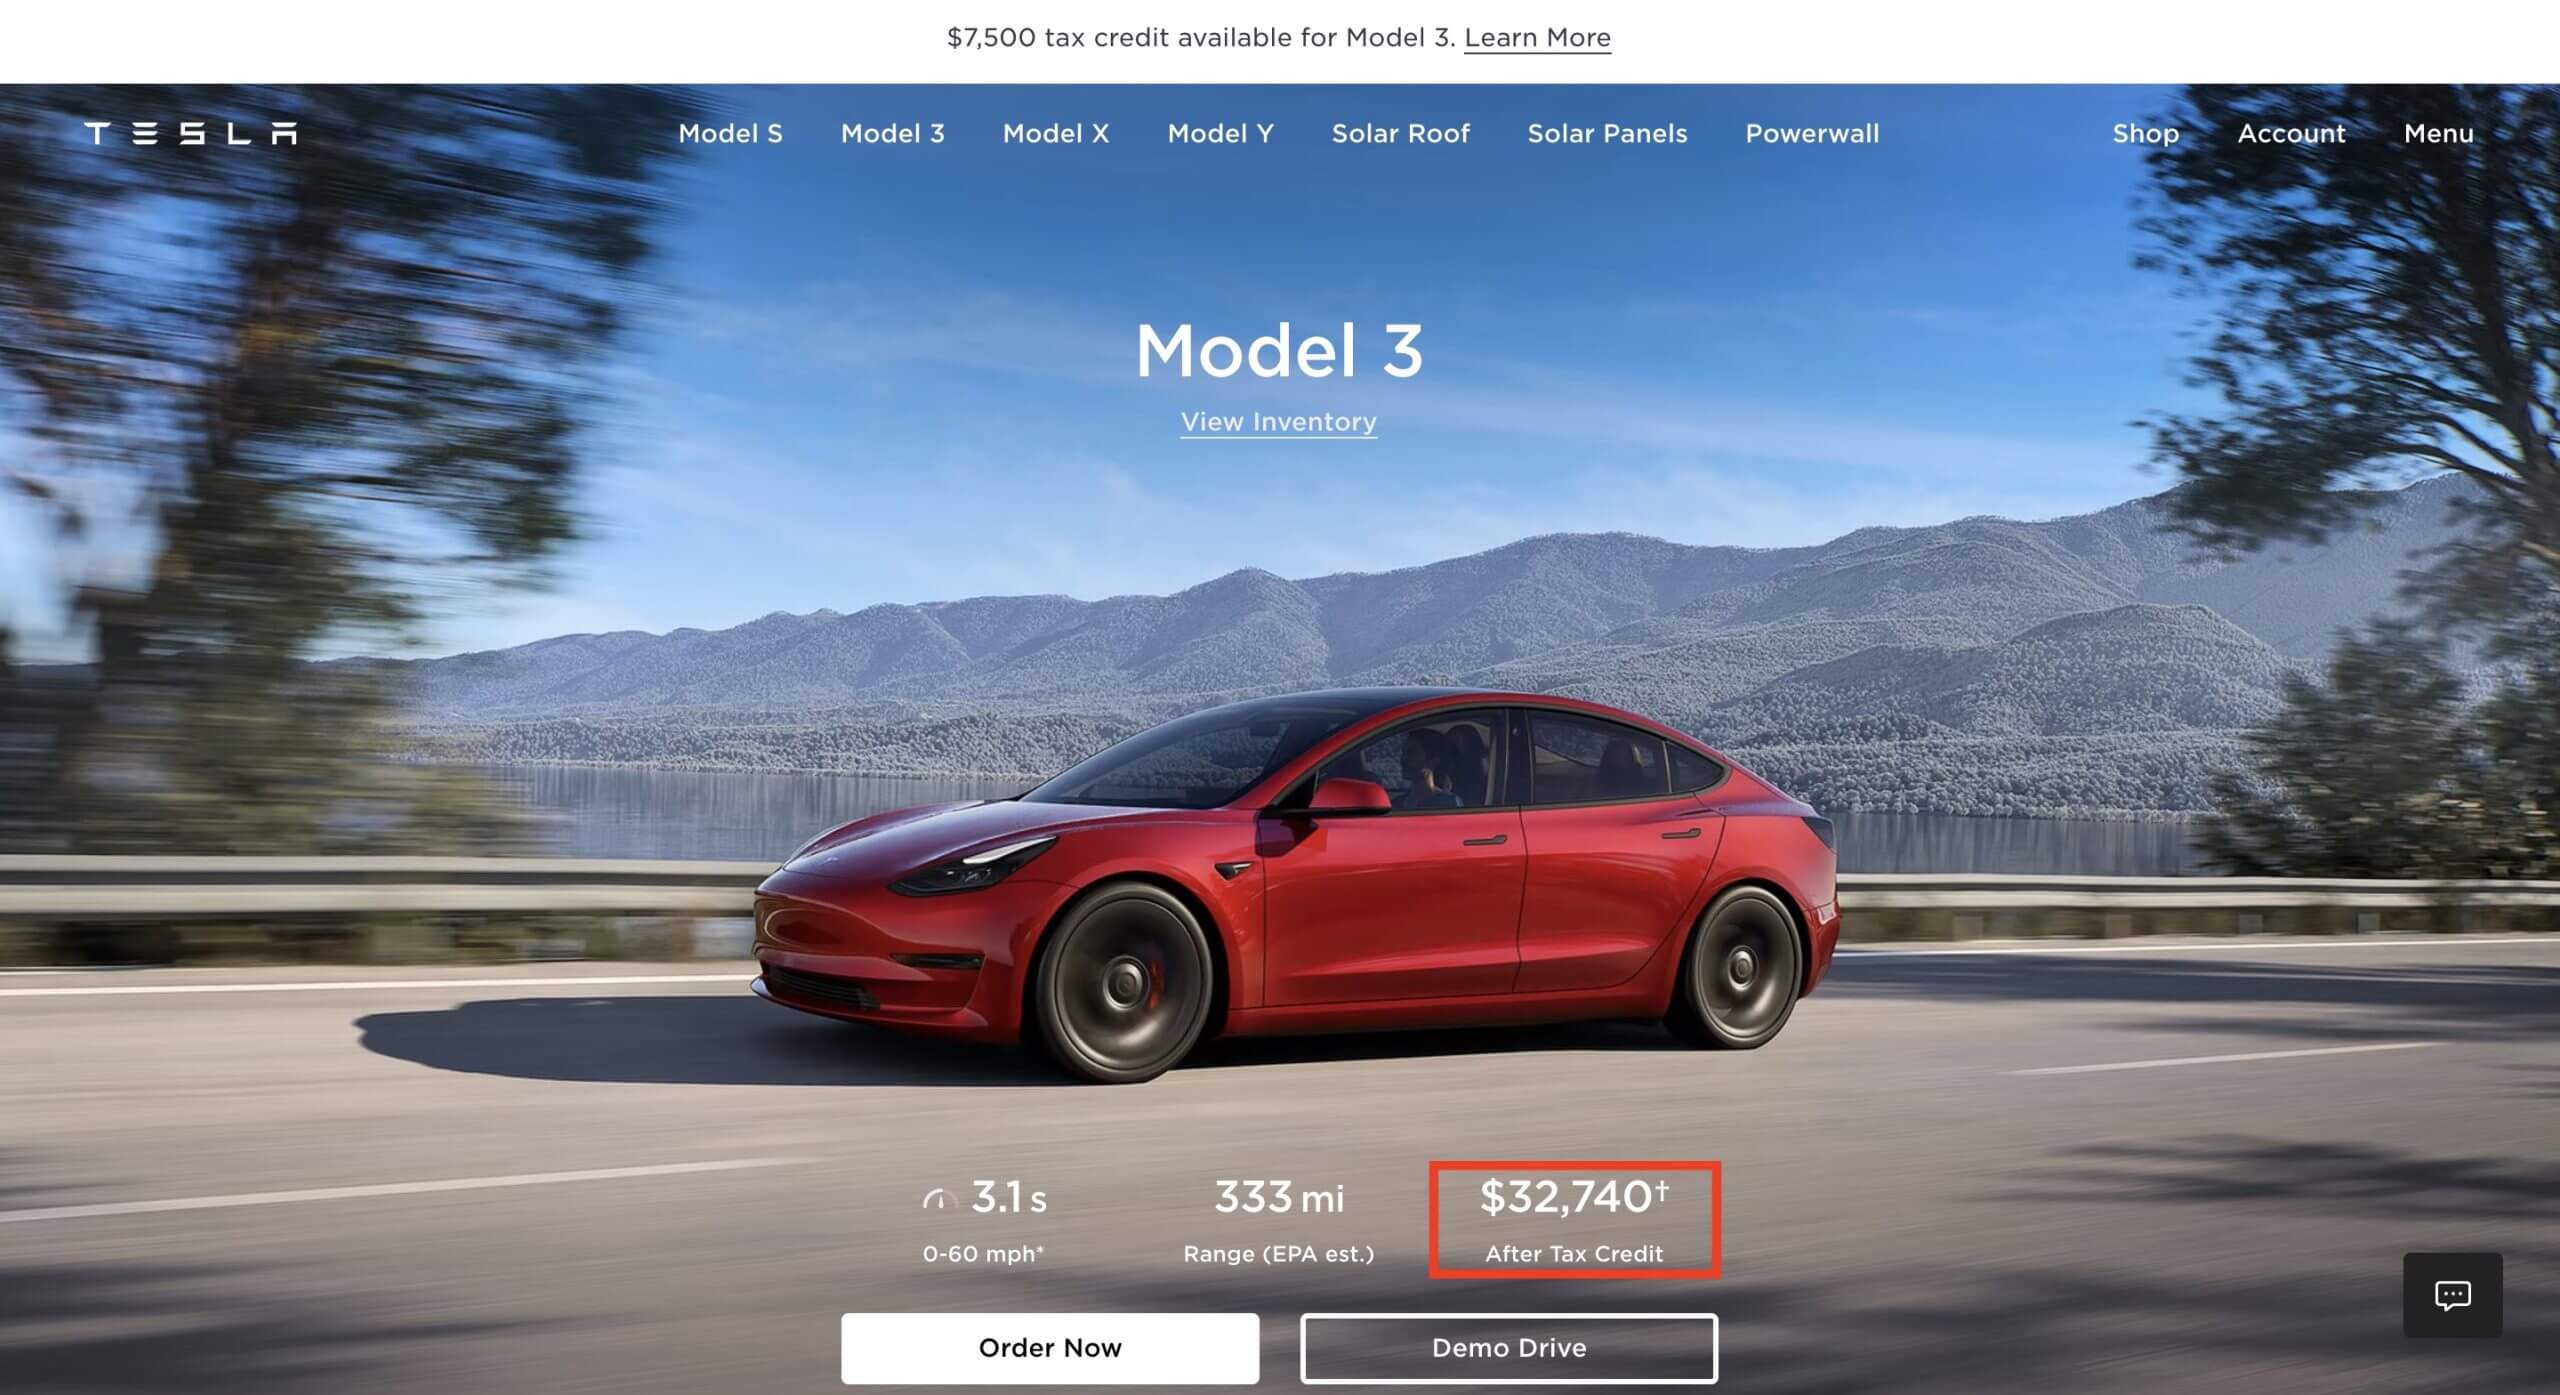 Tesla mula mempromosikan Model 3 dan harga terlaras IRA Model Y